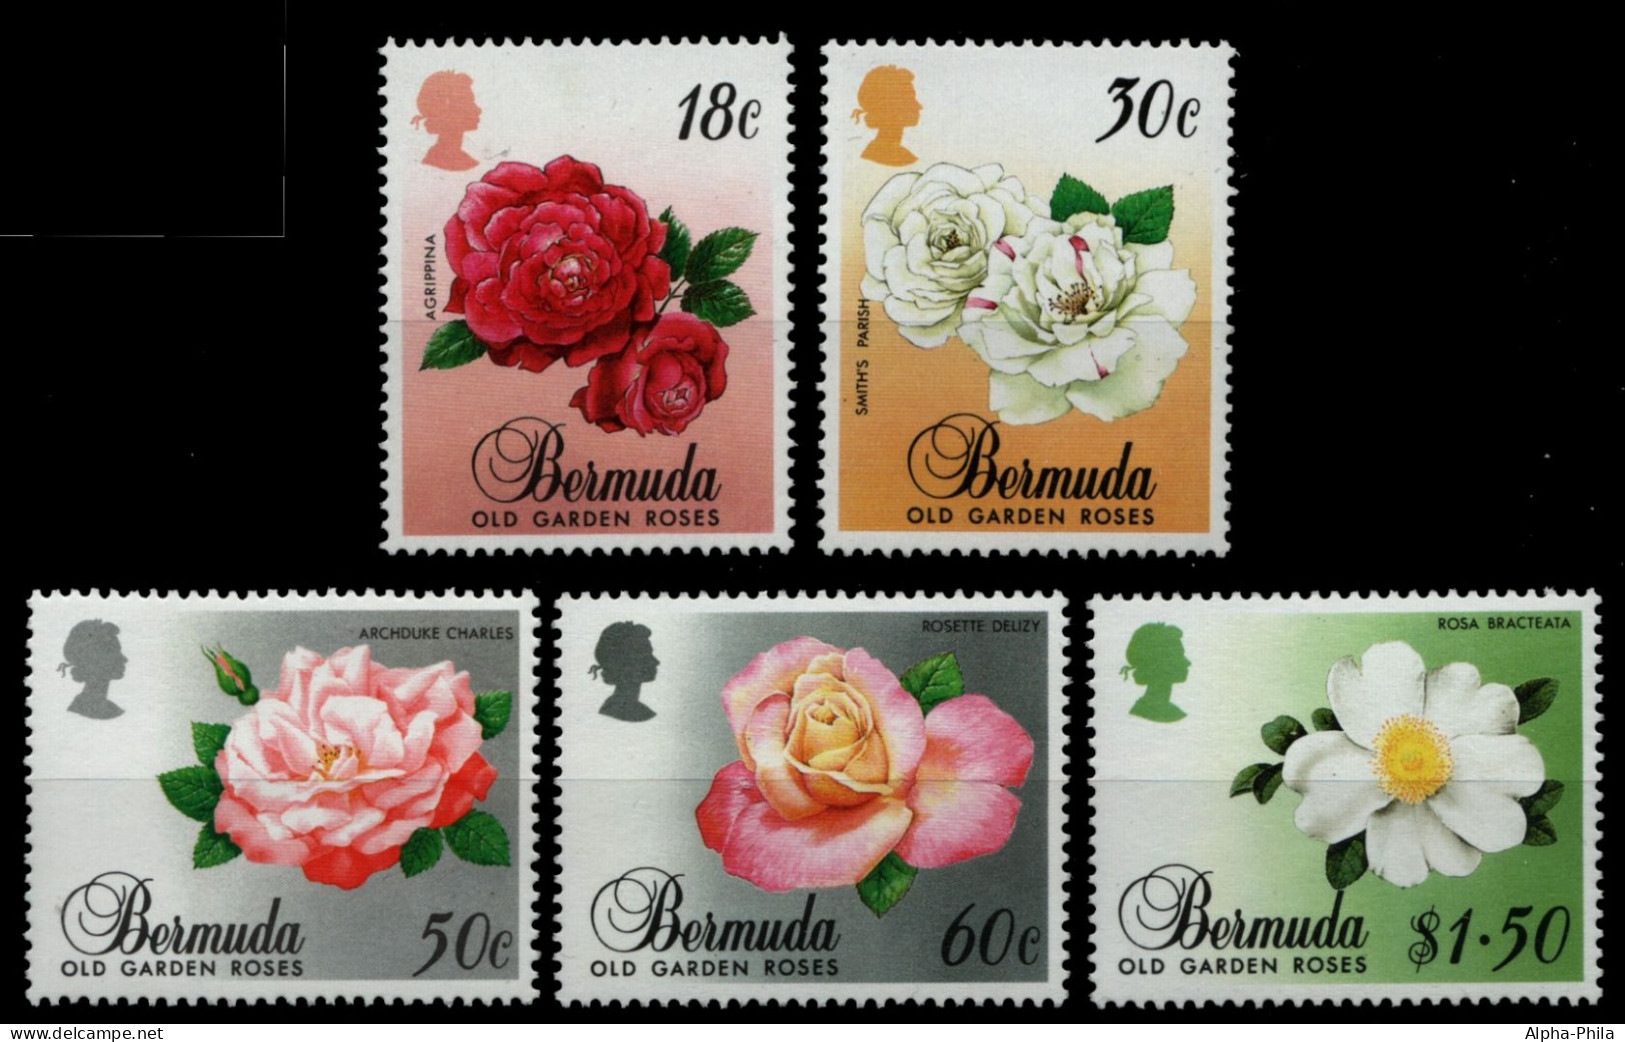 Bermuda 1989 - Mi-Nr. 550-554 ** - MNH - Rosen / Roses - Bermuda